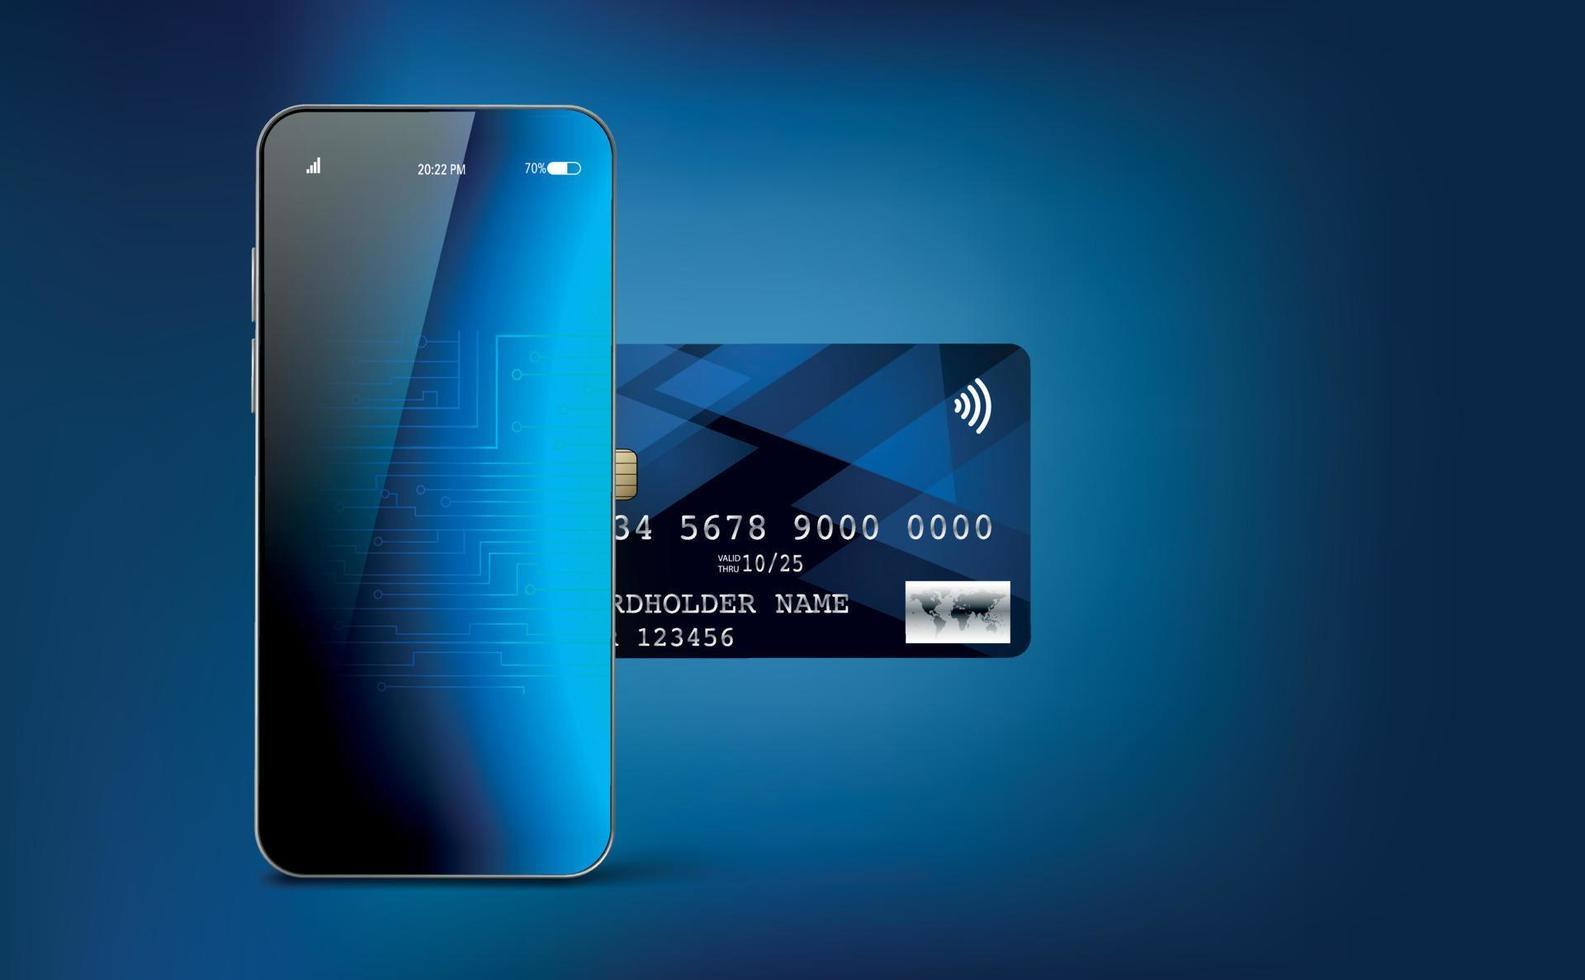 concepto de tarjeta de crédito digital bancaria con teléfono móvil, fondo degradado azul. ilustración vectorial vector